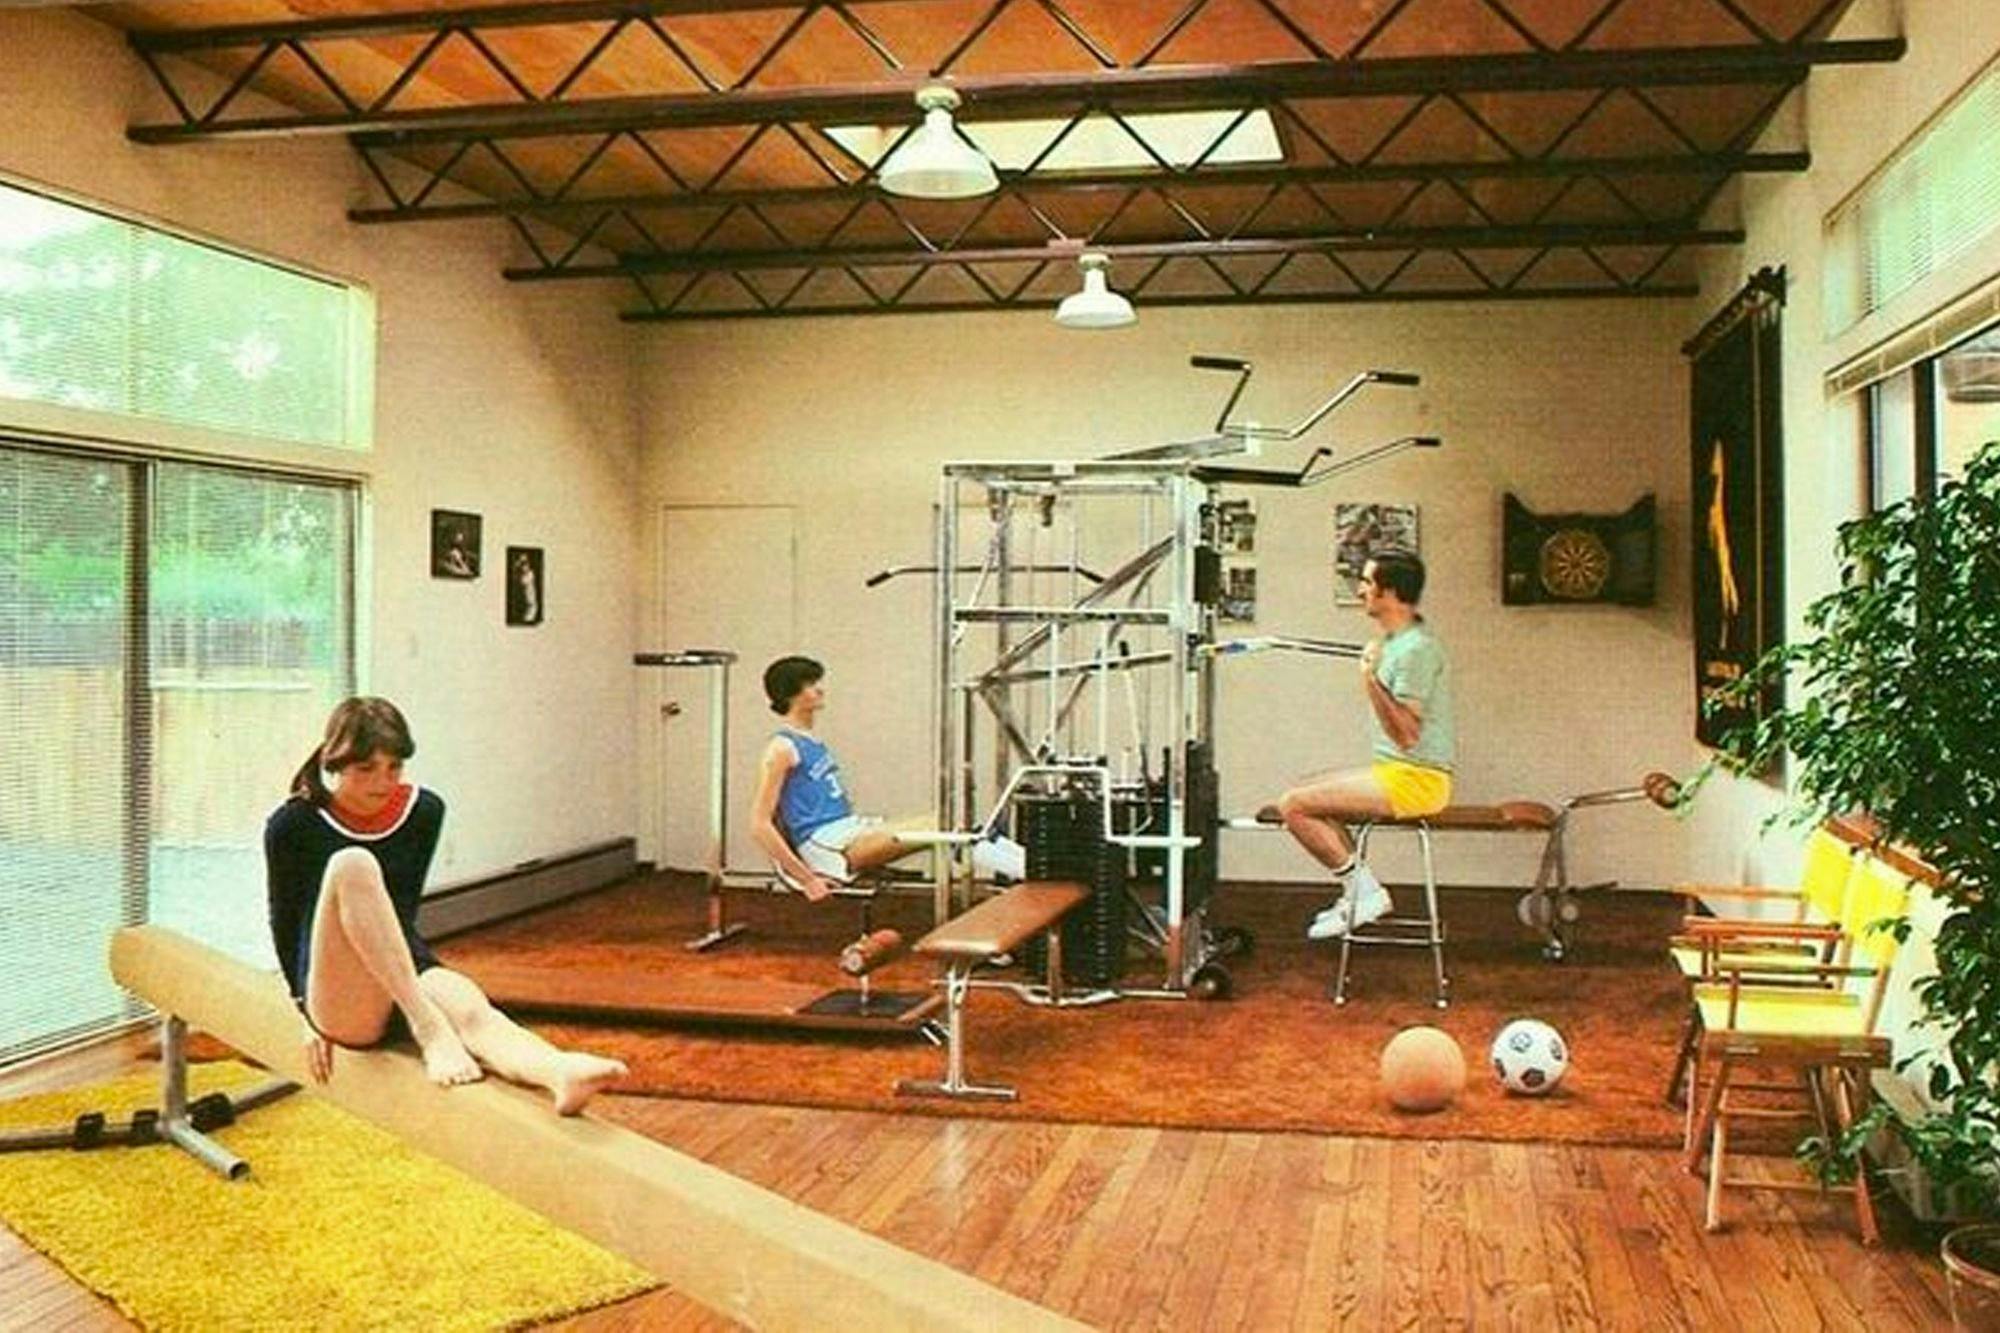 Gym Culture & Machines image